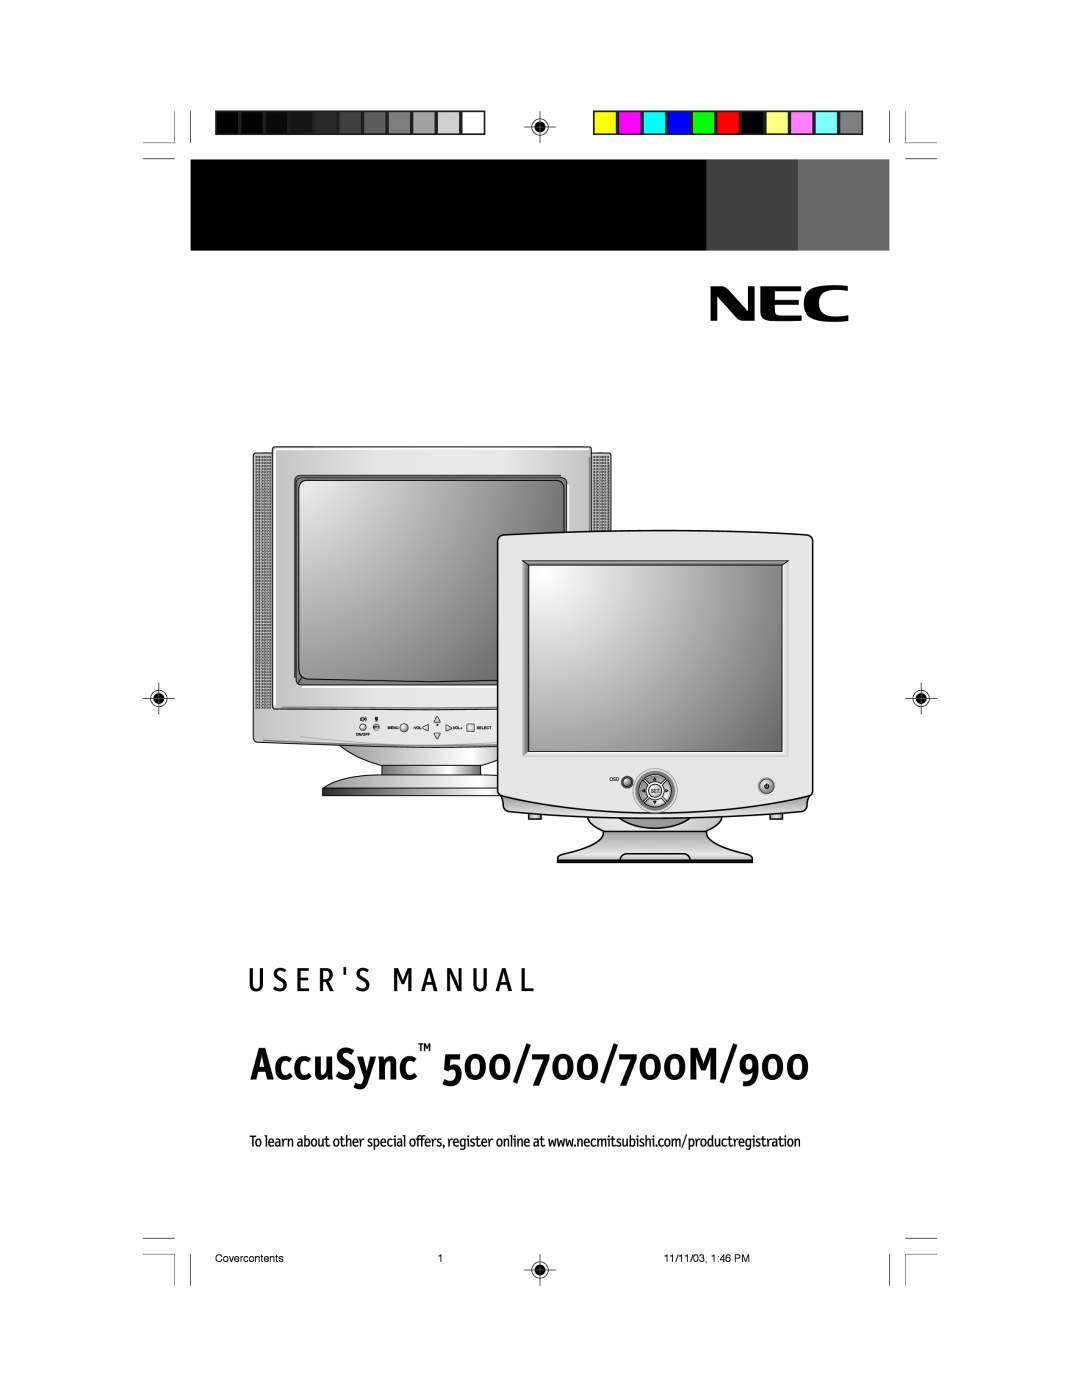 NEC 500, 700, 700M, 900 manual AccuSyncTM 500/700/700M/900, Covercontents, 11/11/03, 146 PM 